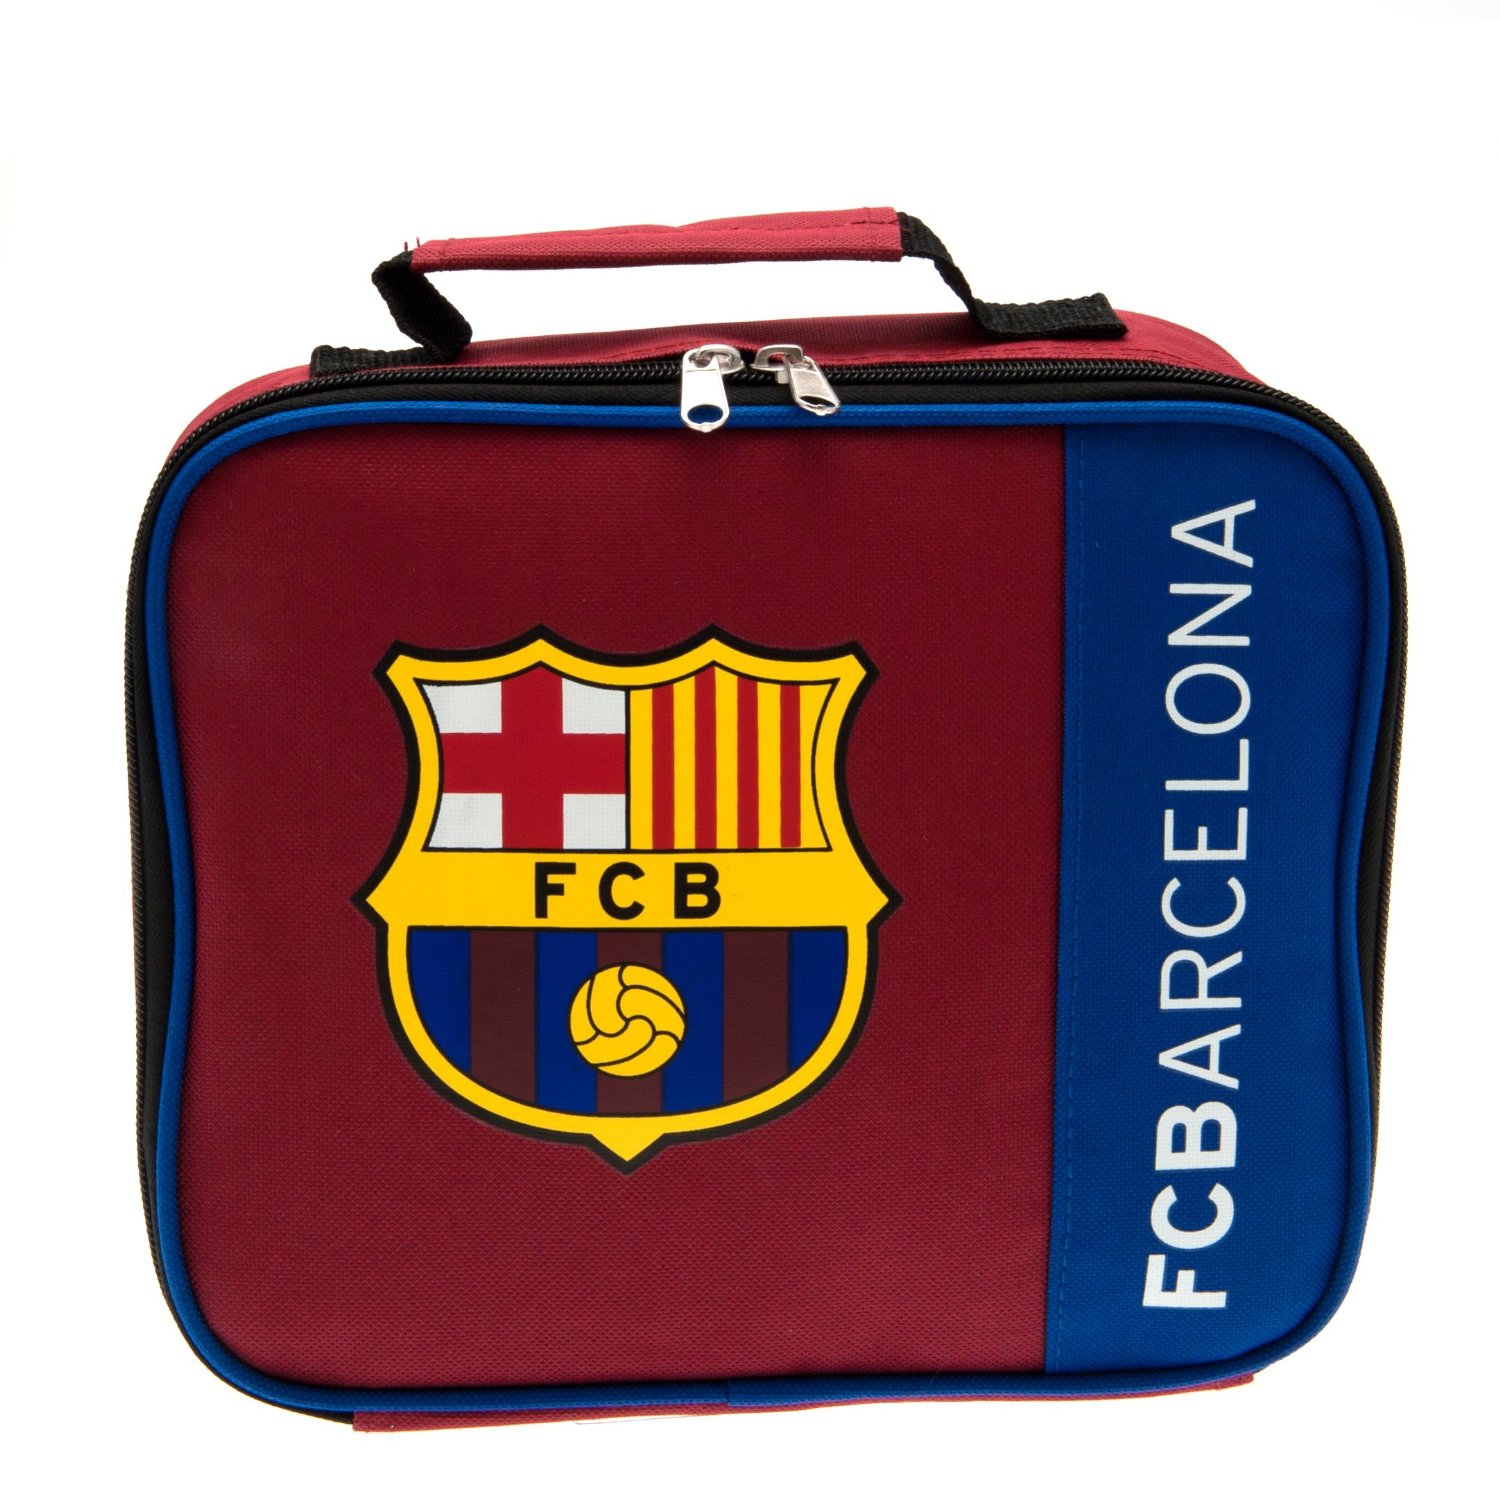 Barcelona Fc 'Wordmark' Football Premium Lunch Bag Official